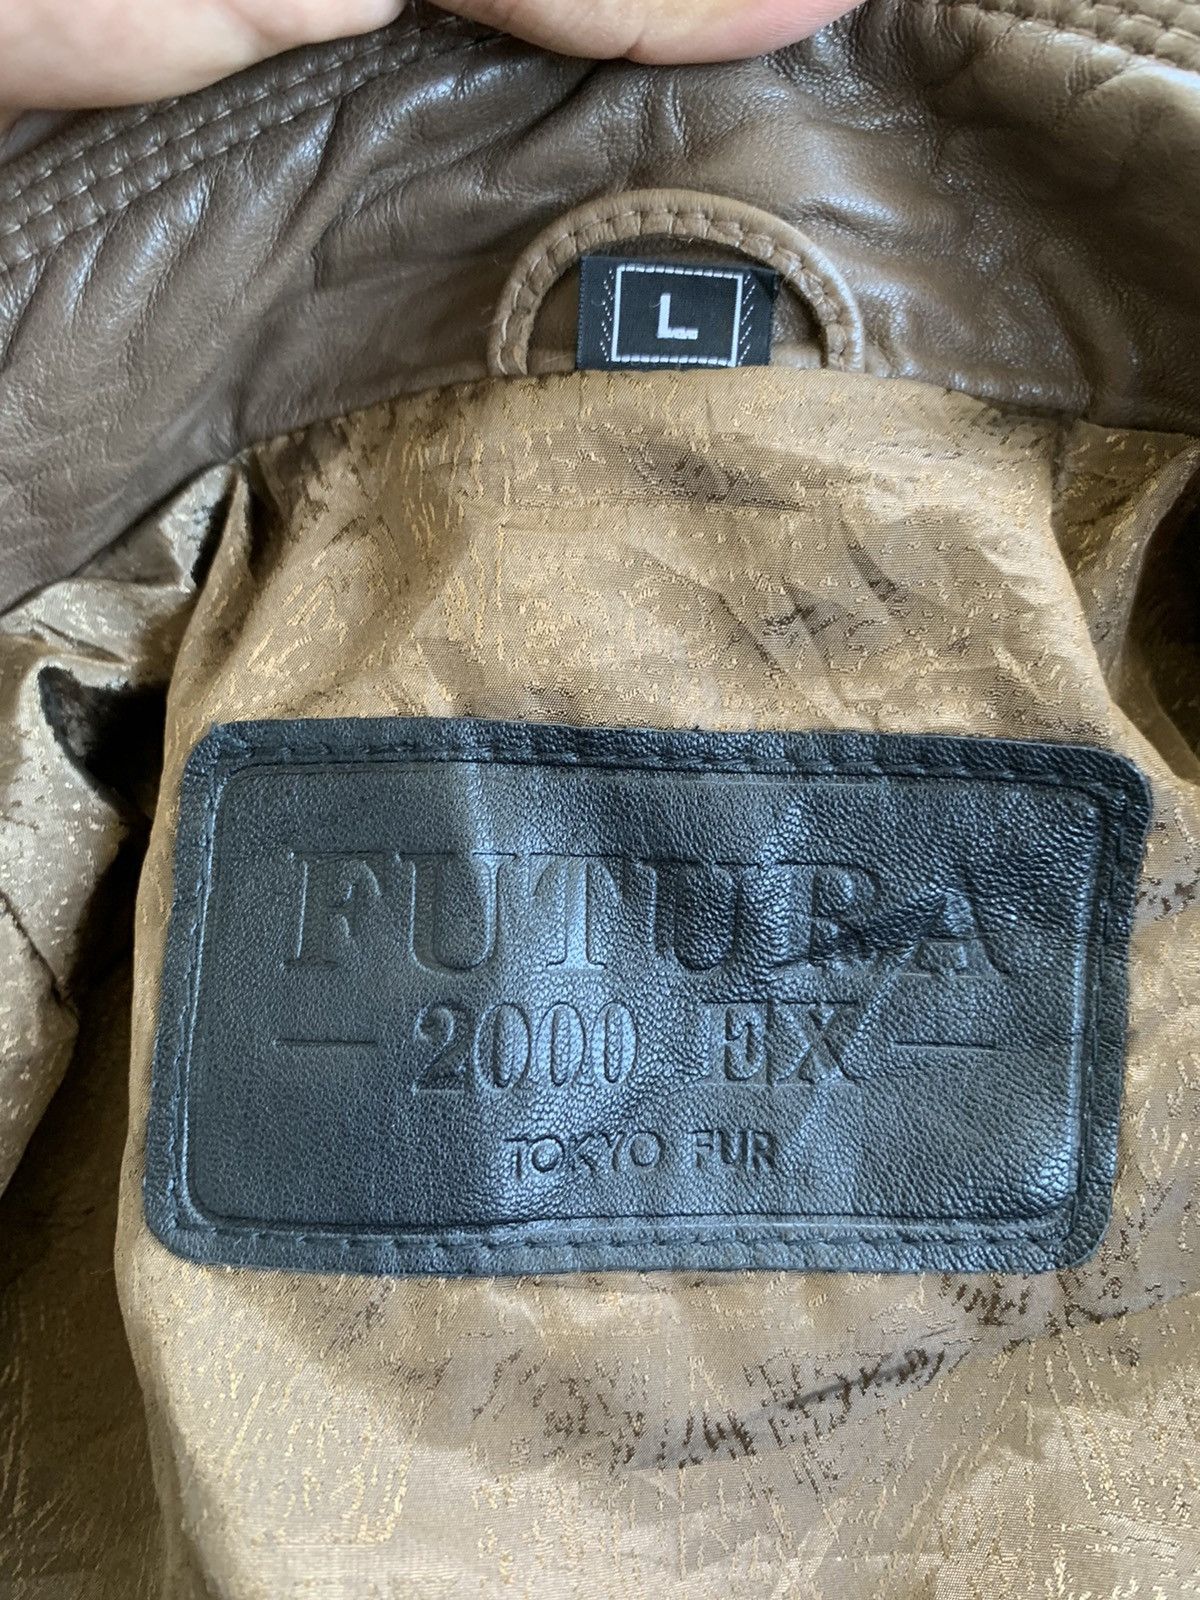 Futura 2000 Futura 2000 Ex Tokyo Fur Leather Long Jacket Size US L / EU 52-54 / 3 - 15 Thumbnail